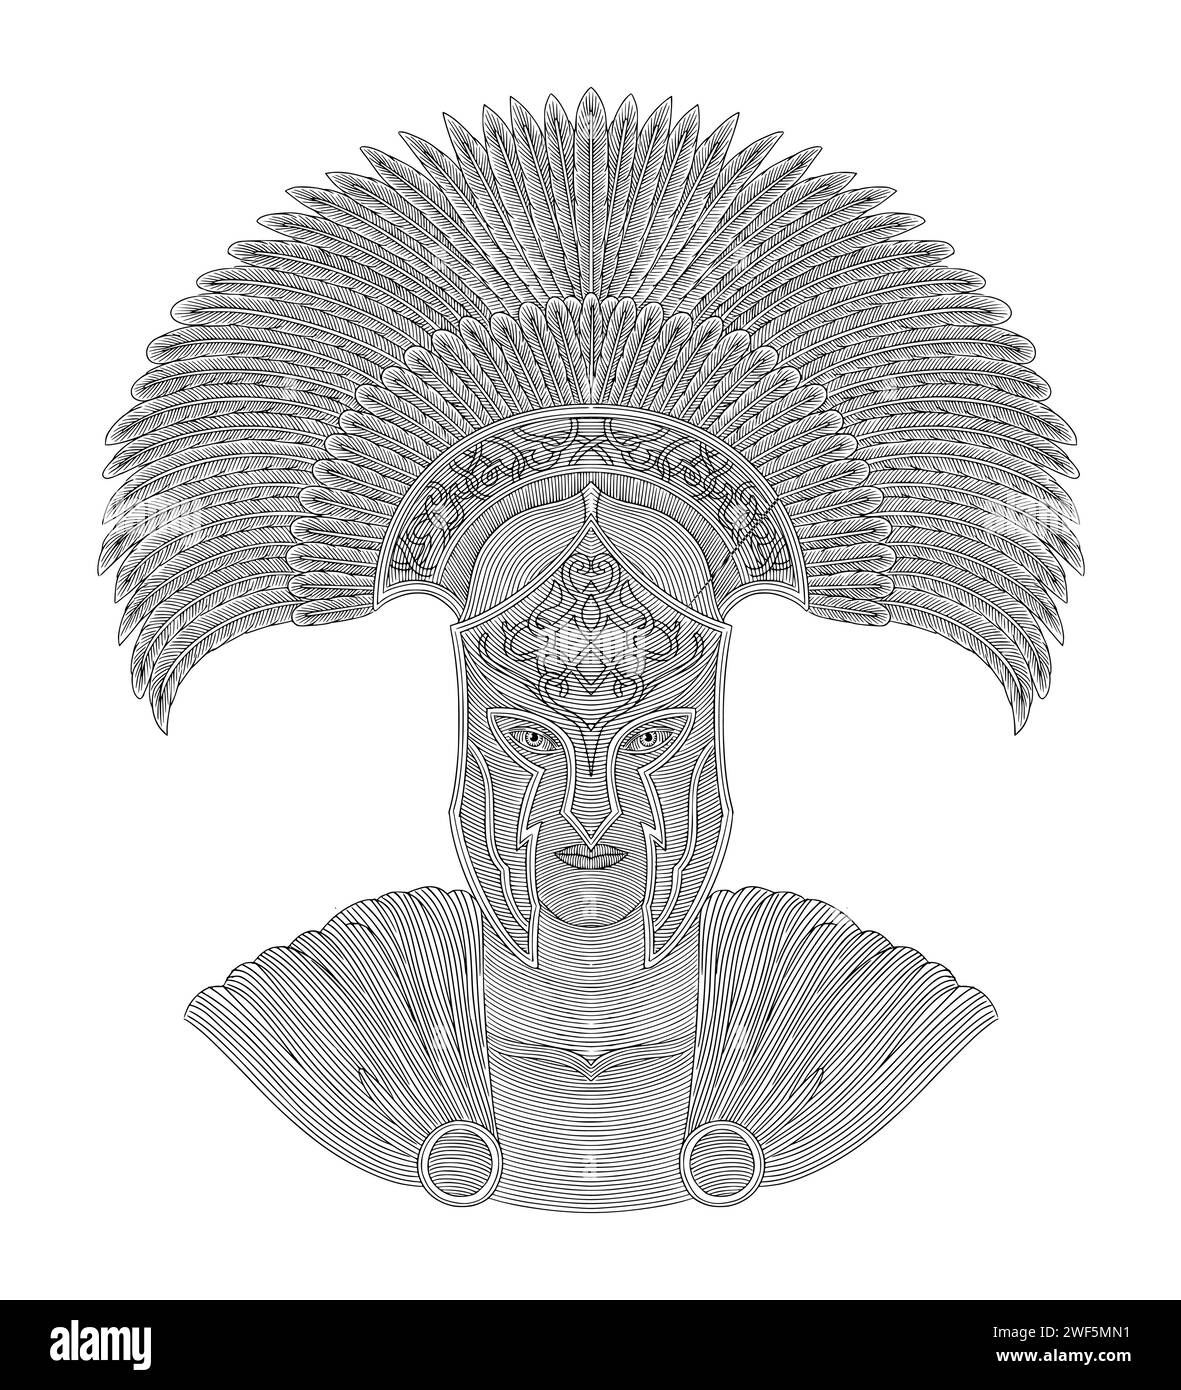 Spartan warrior commander, vintage engraving drawing style illustration Stock Vector